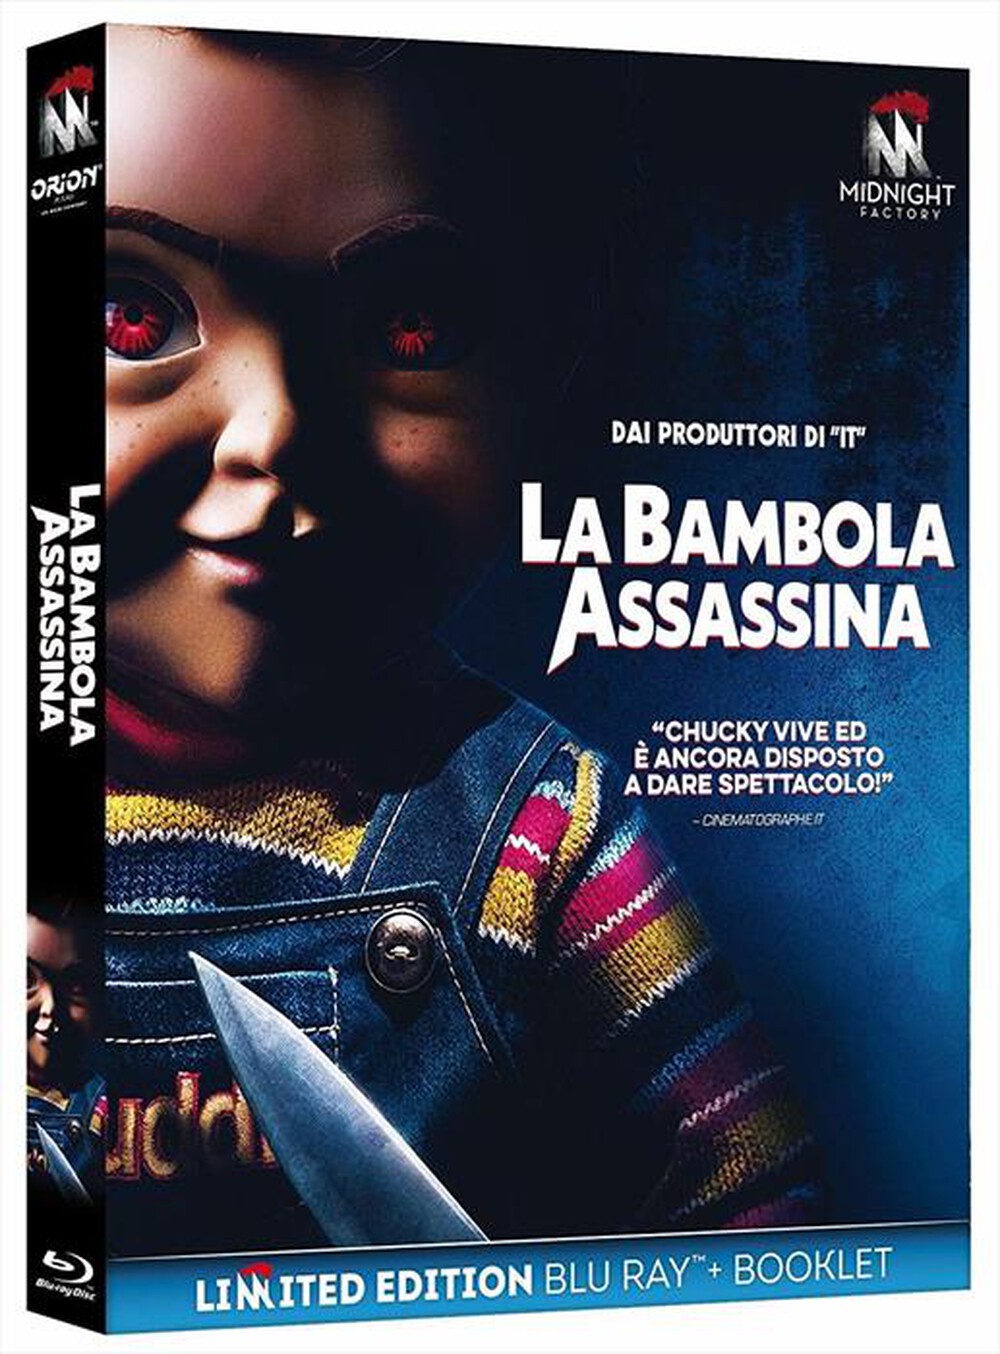 "Midnight Factory - Bambola Assassina (La) (Blu-Ray+Booklet)"